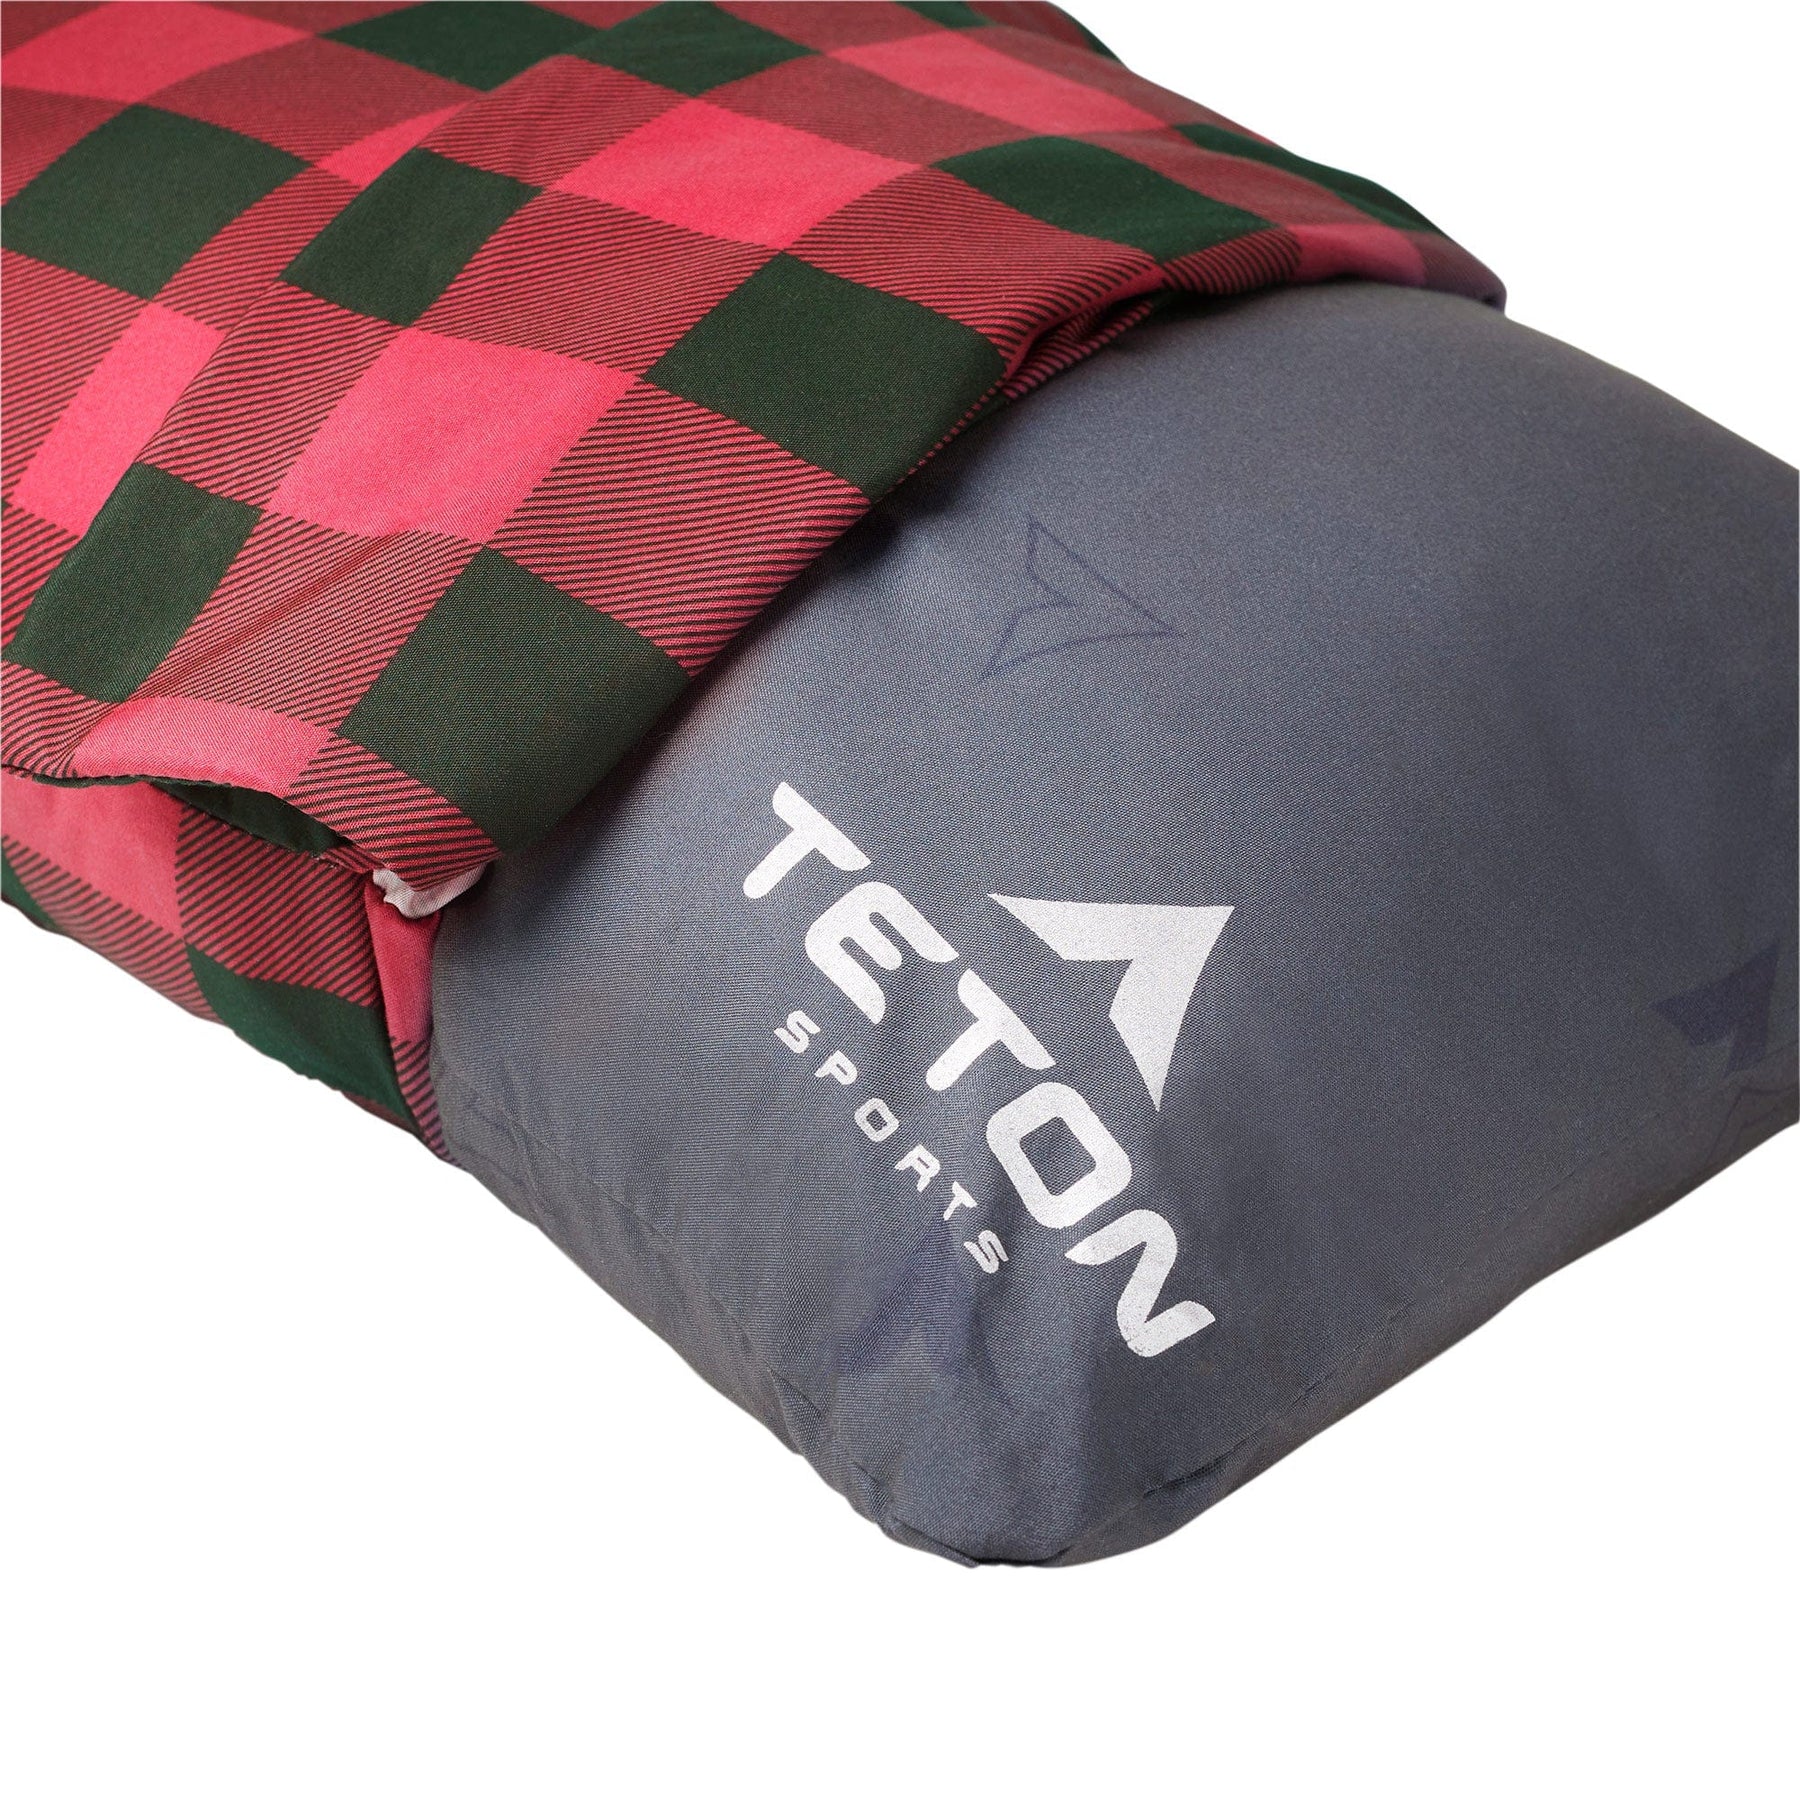 TETON Sports Camp Pillow & Pillowcase